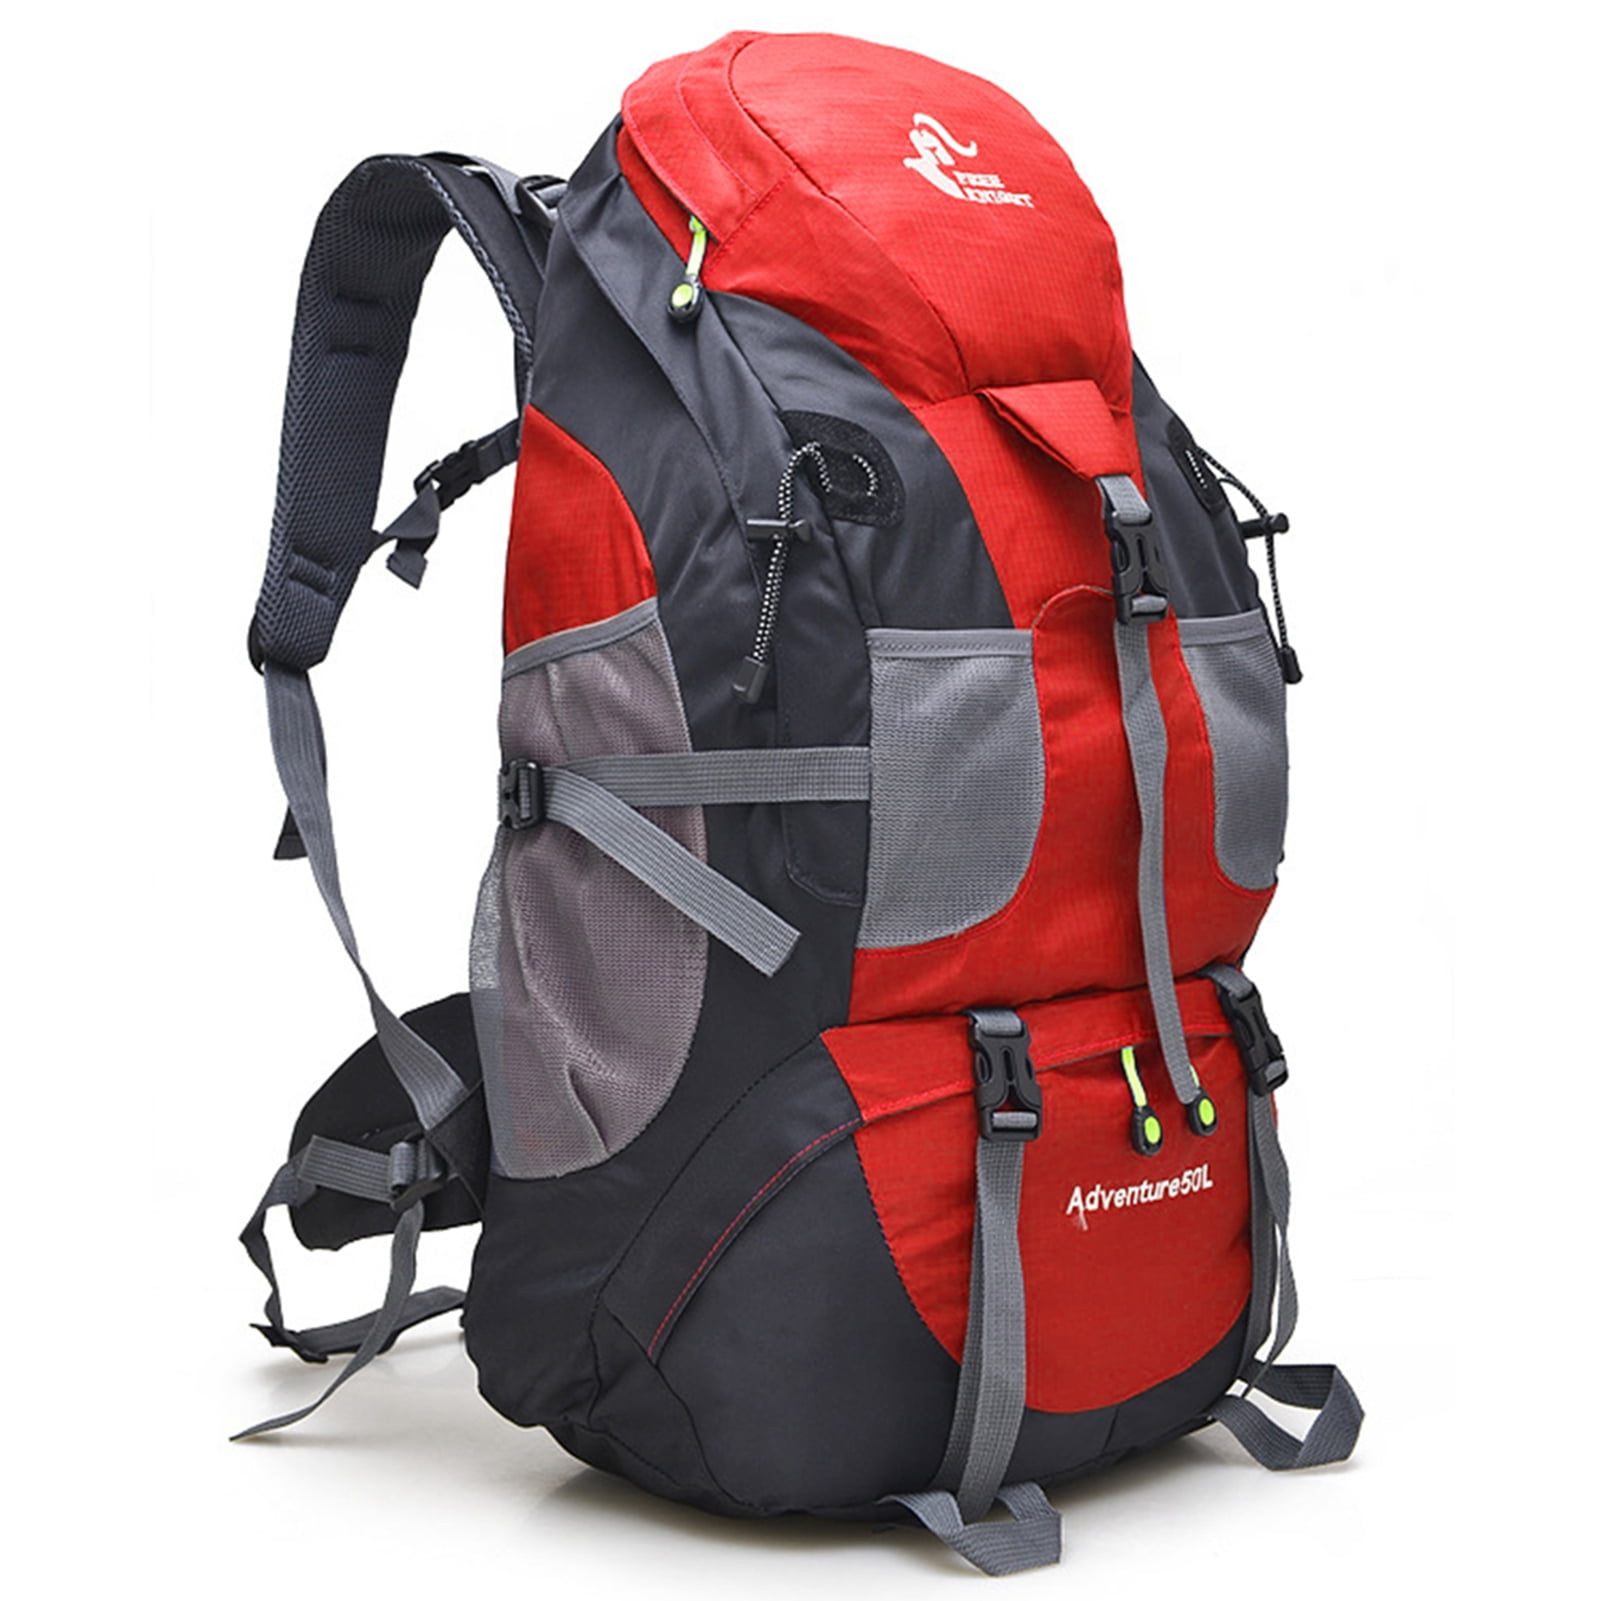 Gecheer 50L Hiking Backpack Waterproof Camping Bag for Climbing ...